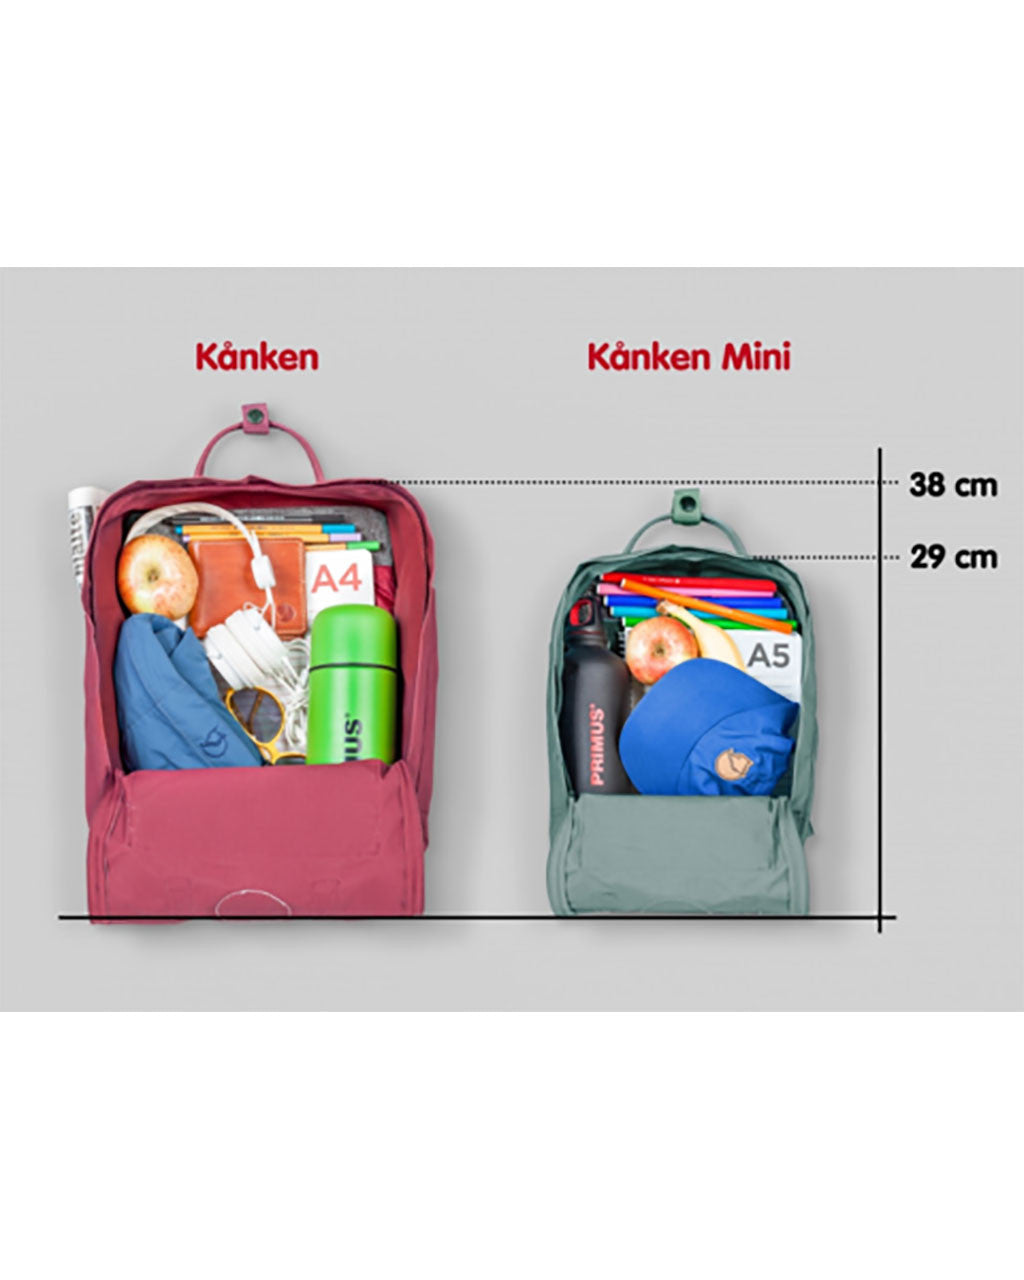 Fjallraven Kanken Mini Backpack: Iconic Design Meets Functional